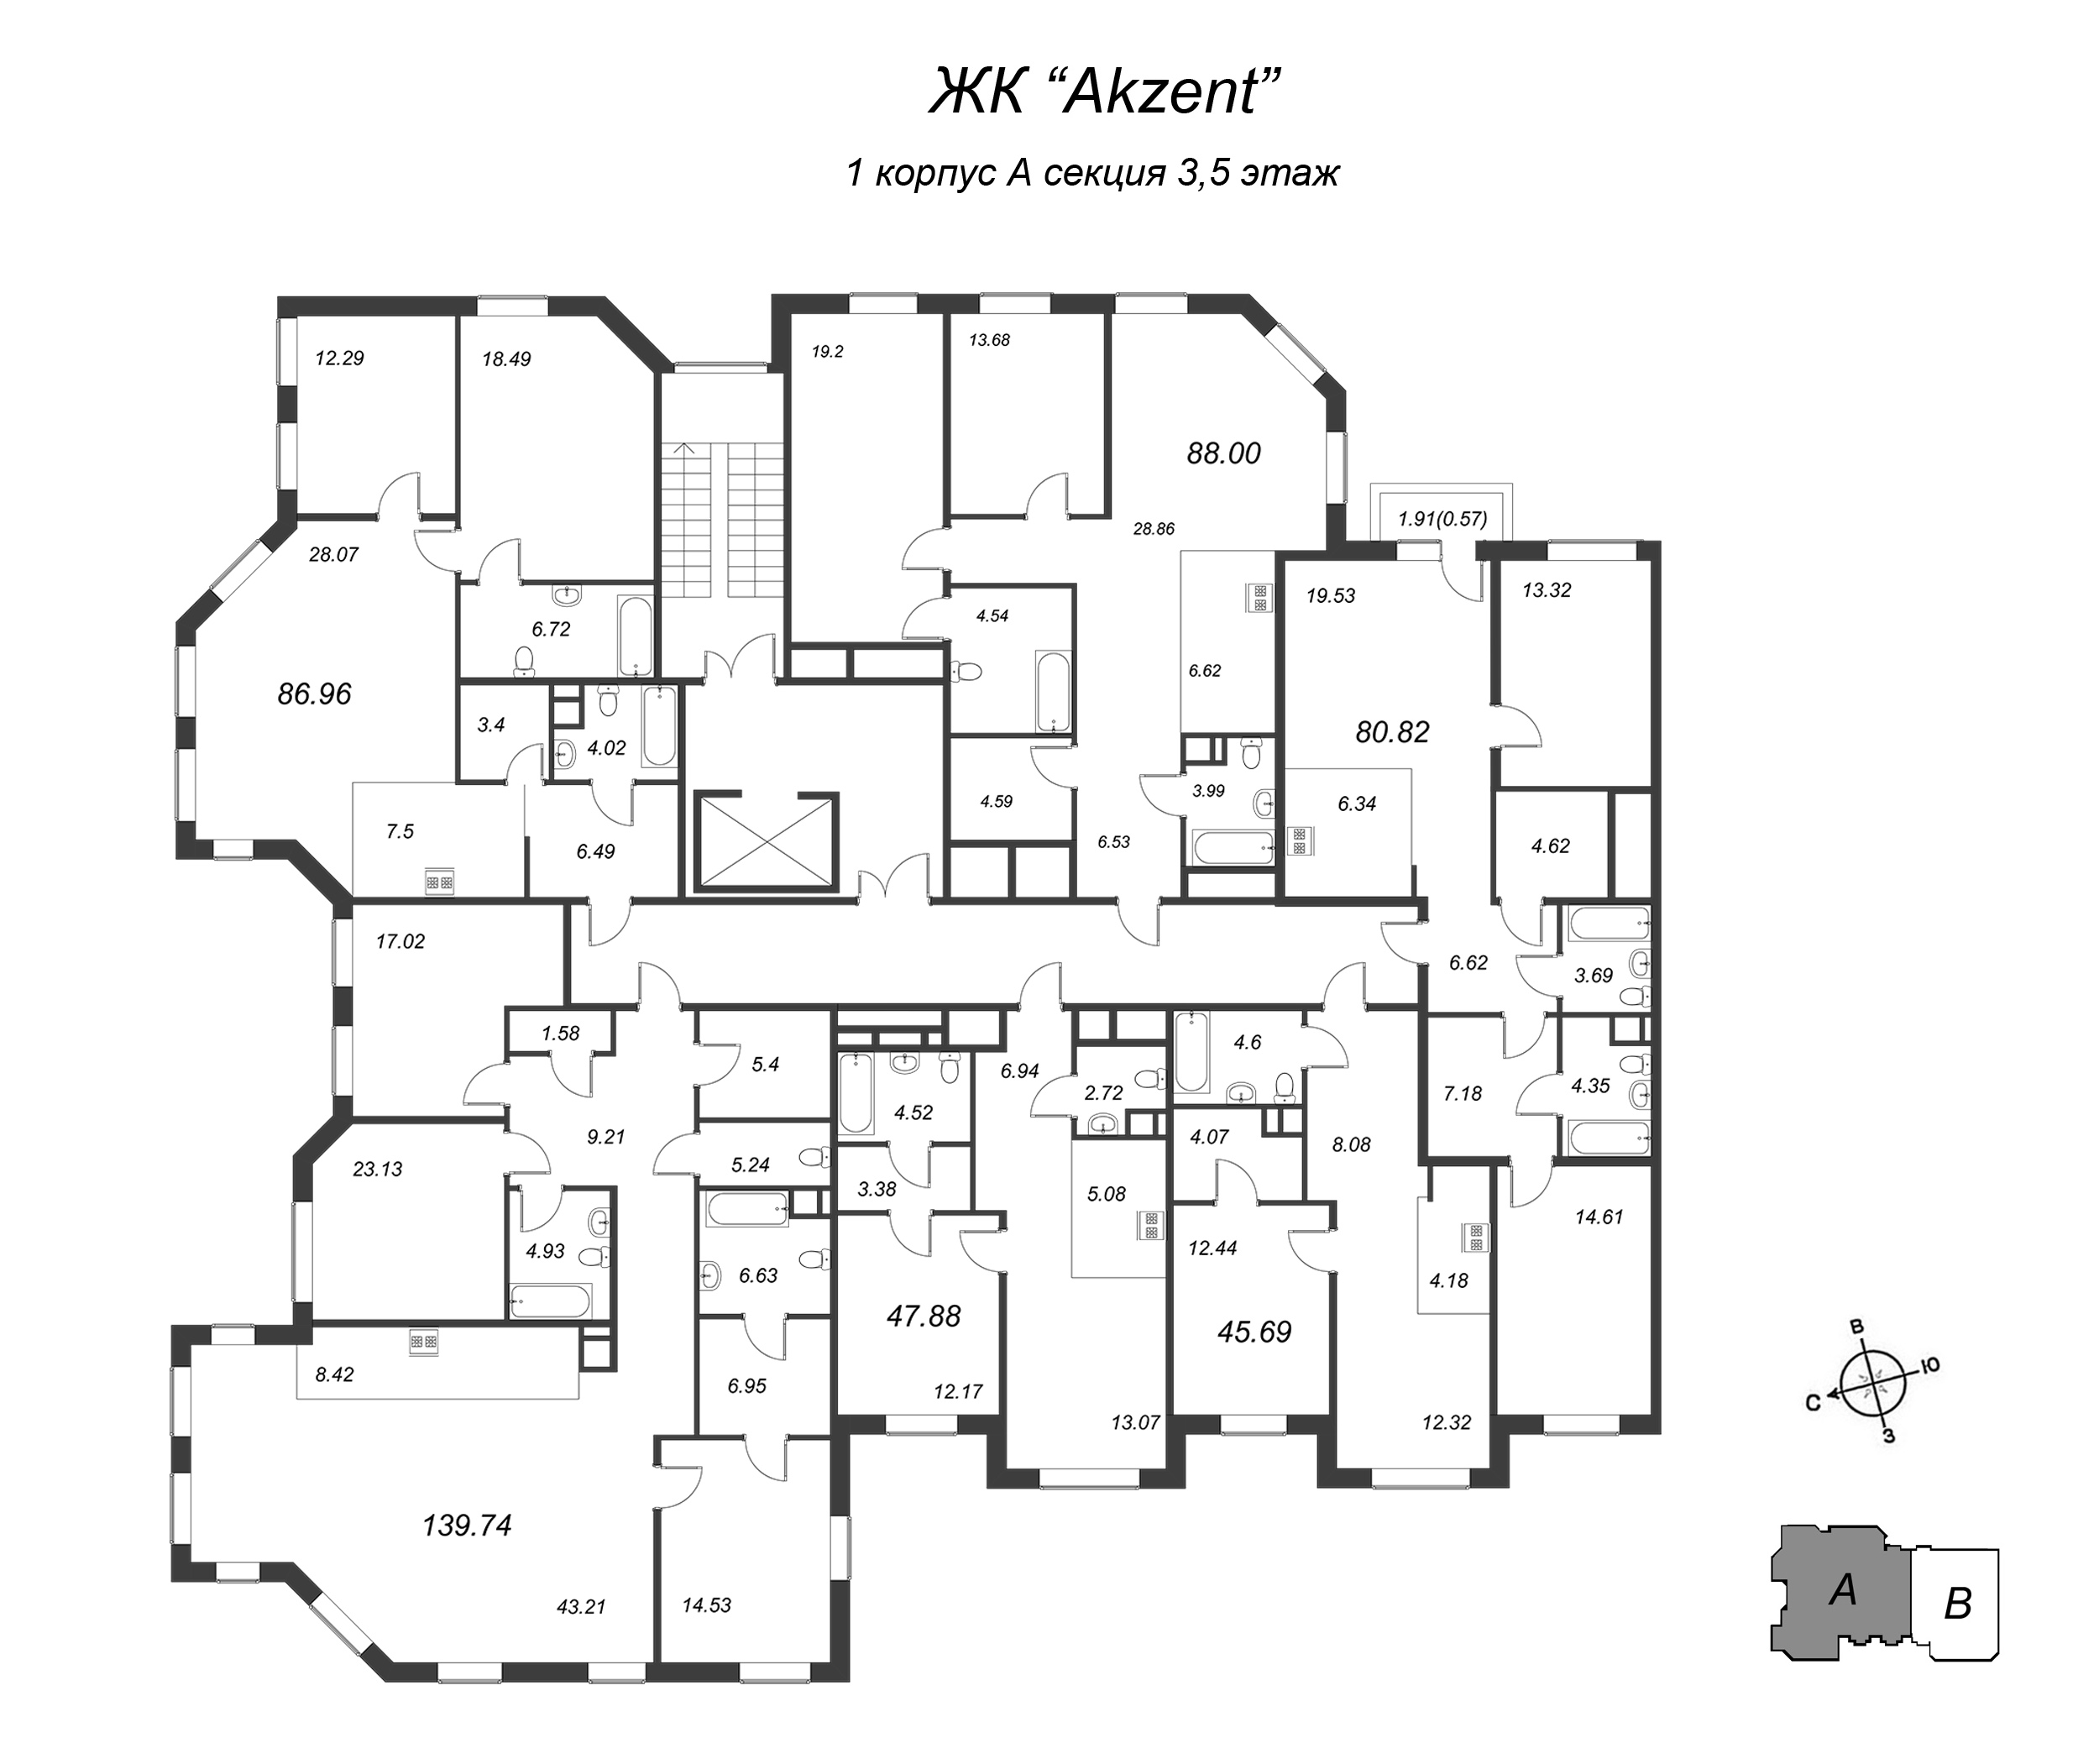 3-комнатная (Евро) квартира, 87.24 м² в ЖК "Akzent" - планировка этажа